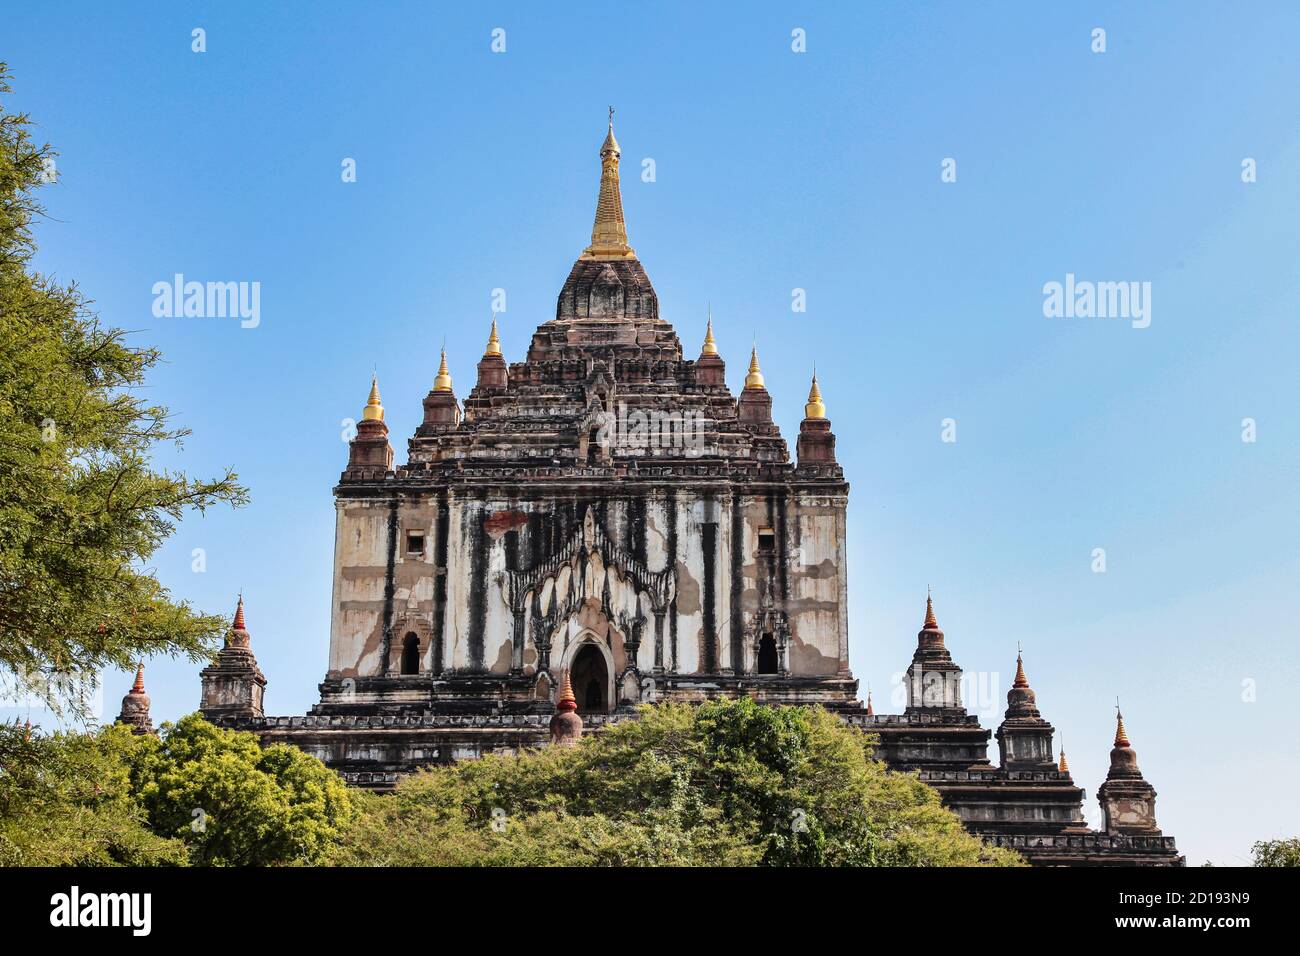 Ananda Buddhist Temple built by King Kyansittha in 1105. Bagan archaeological zone, Myanmar former Burma Stock Photo